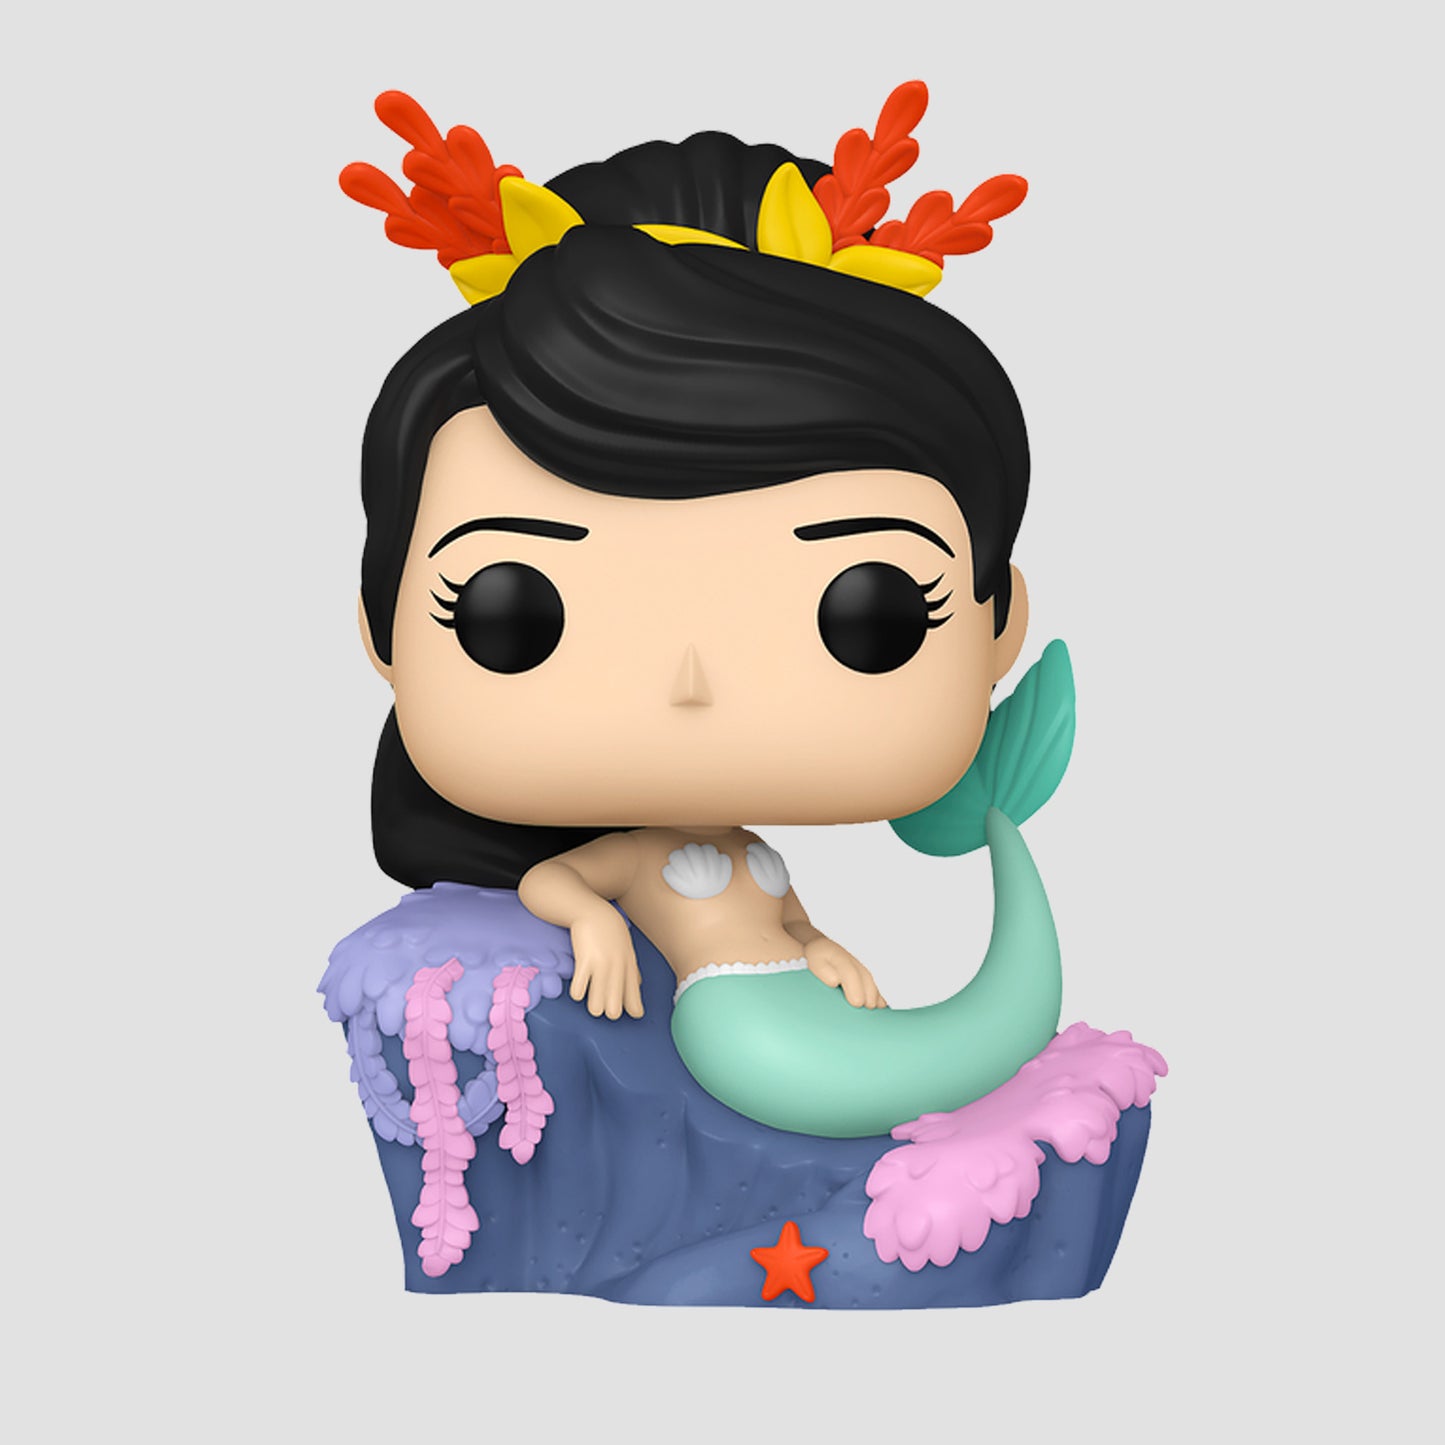 Mermaid (Peter Pan) Disney Funko Pop!